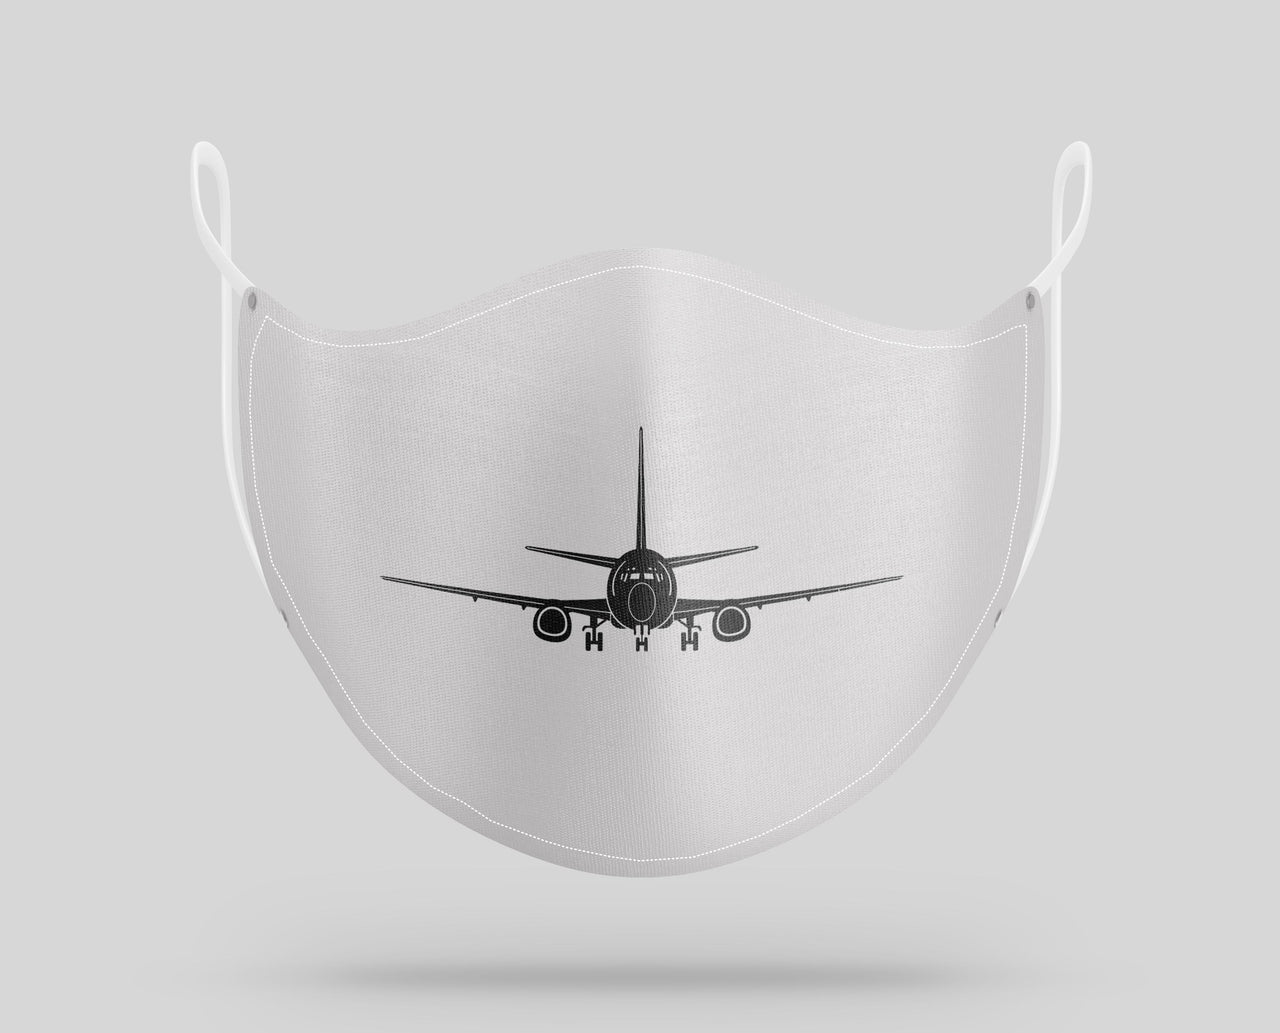 Boeing 737 Silhouette Designed Face Masks